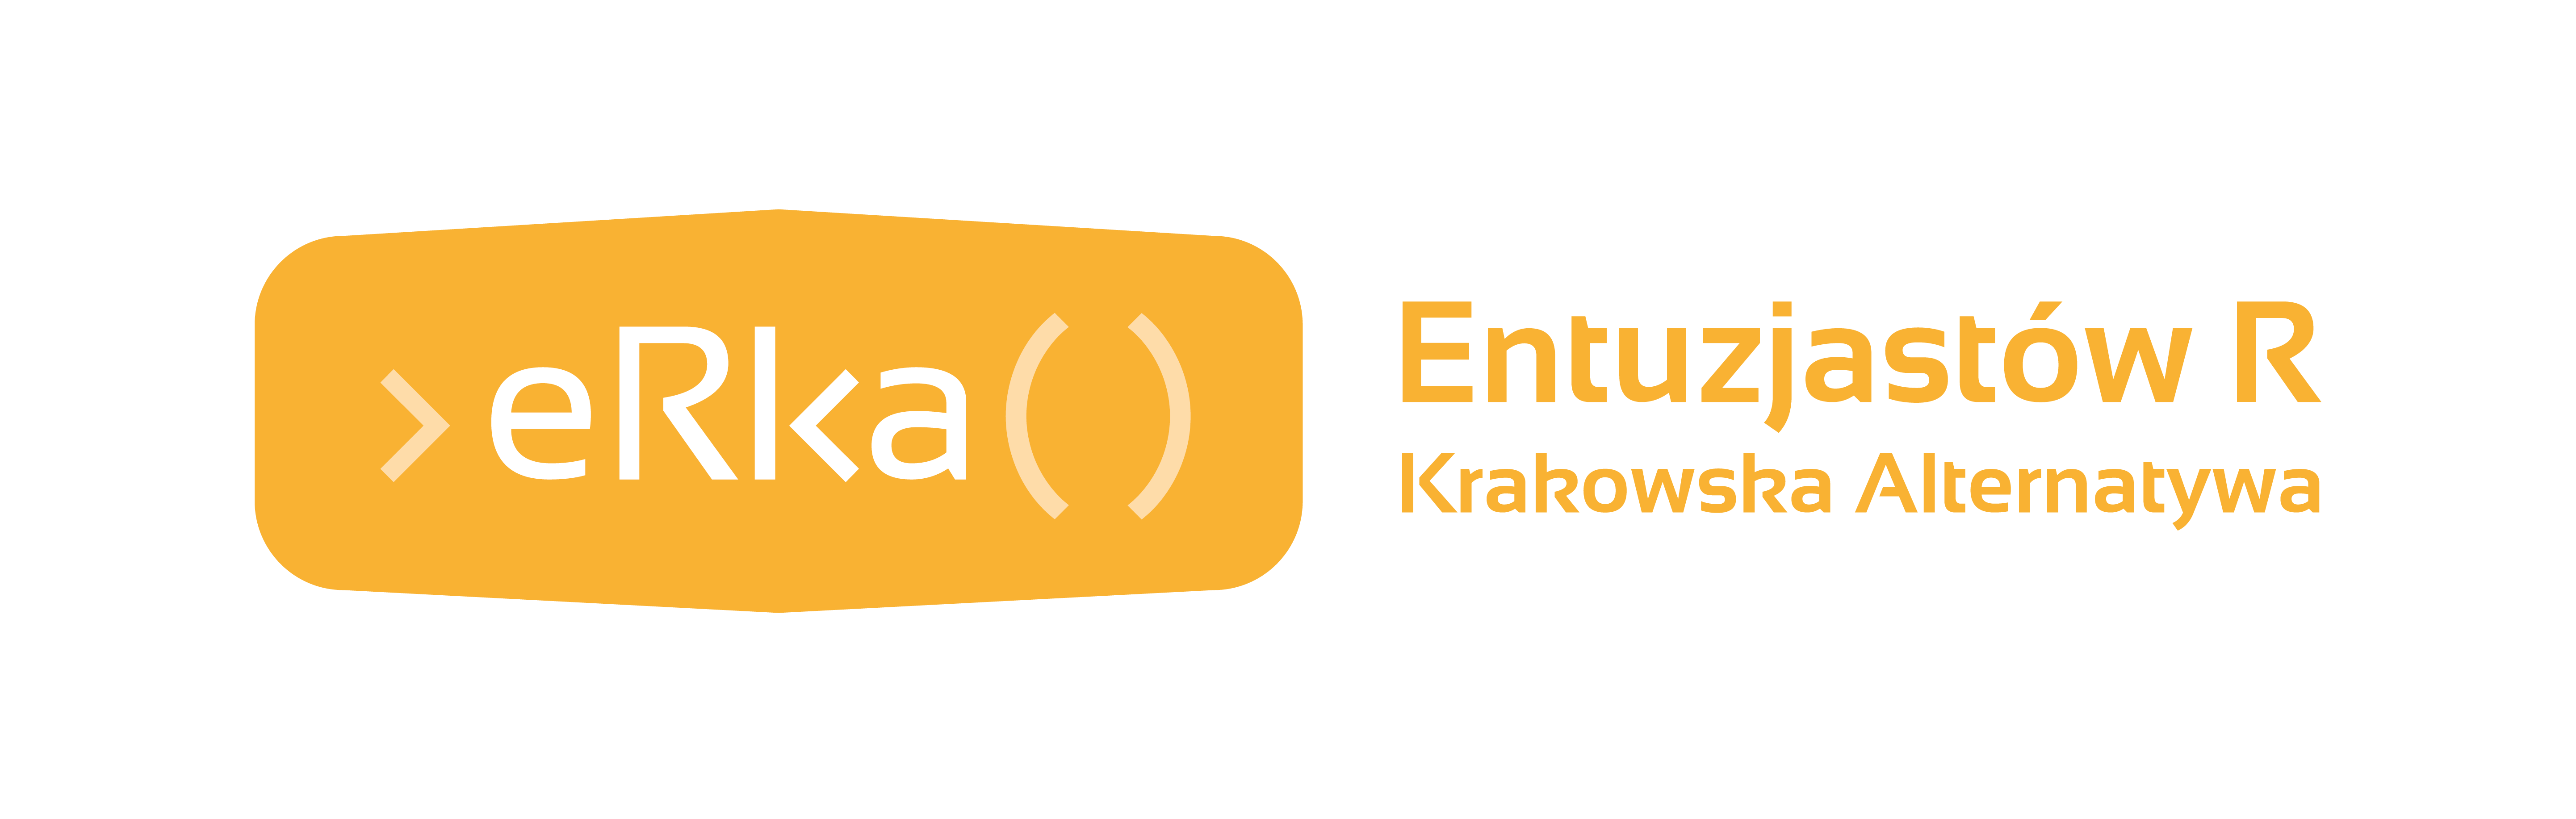 Entuzjastów R Krakowska Alternatywa (eRka) logo